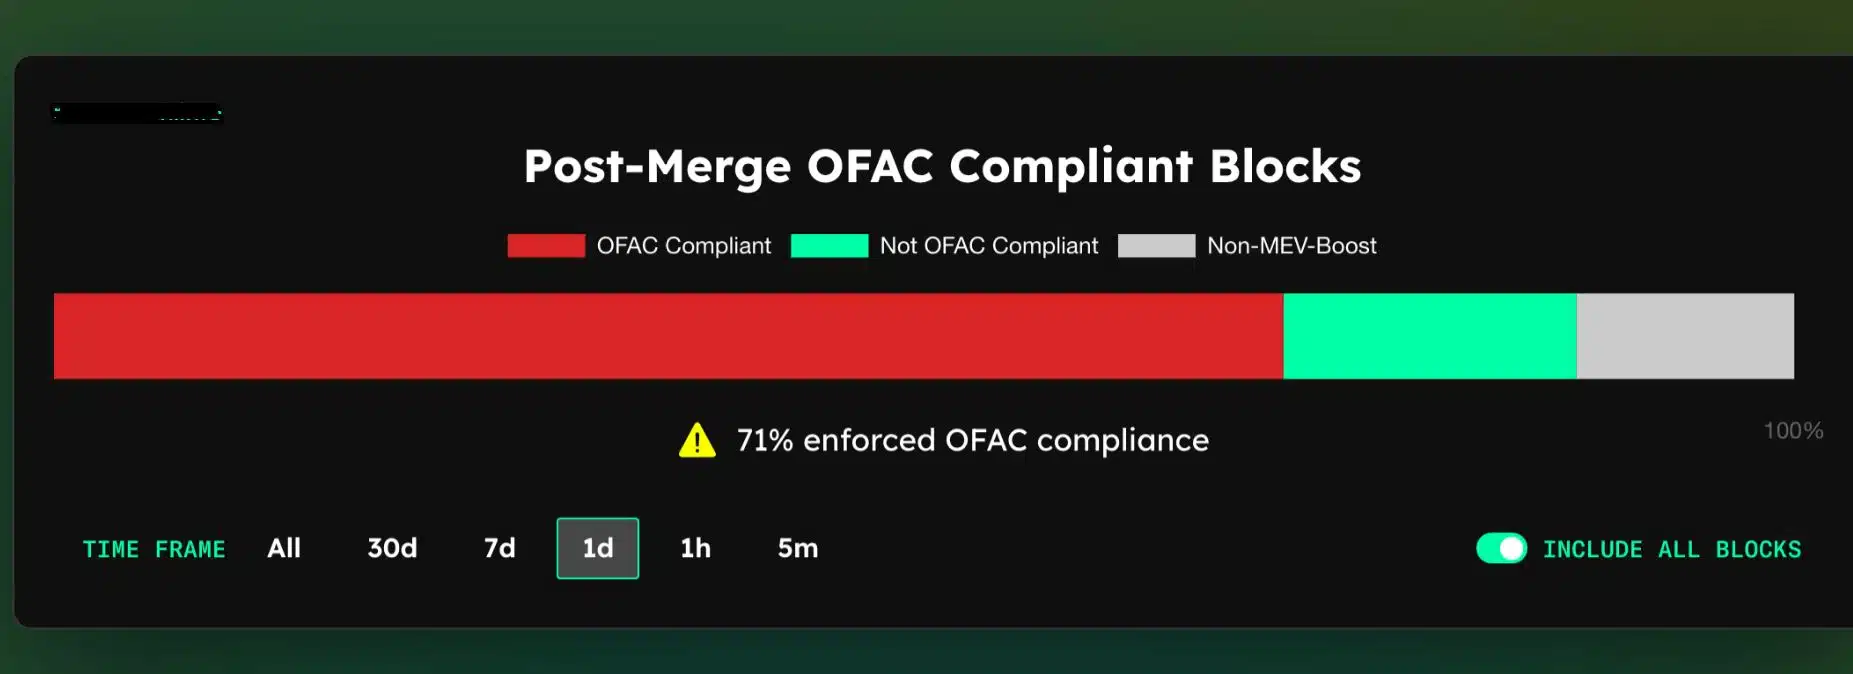 Post-Merge OFAC Compliant Blocks